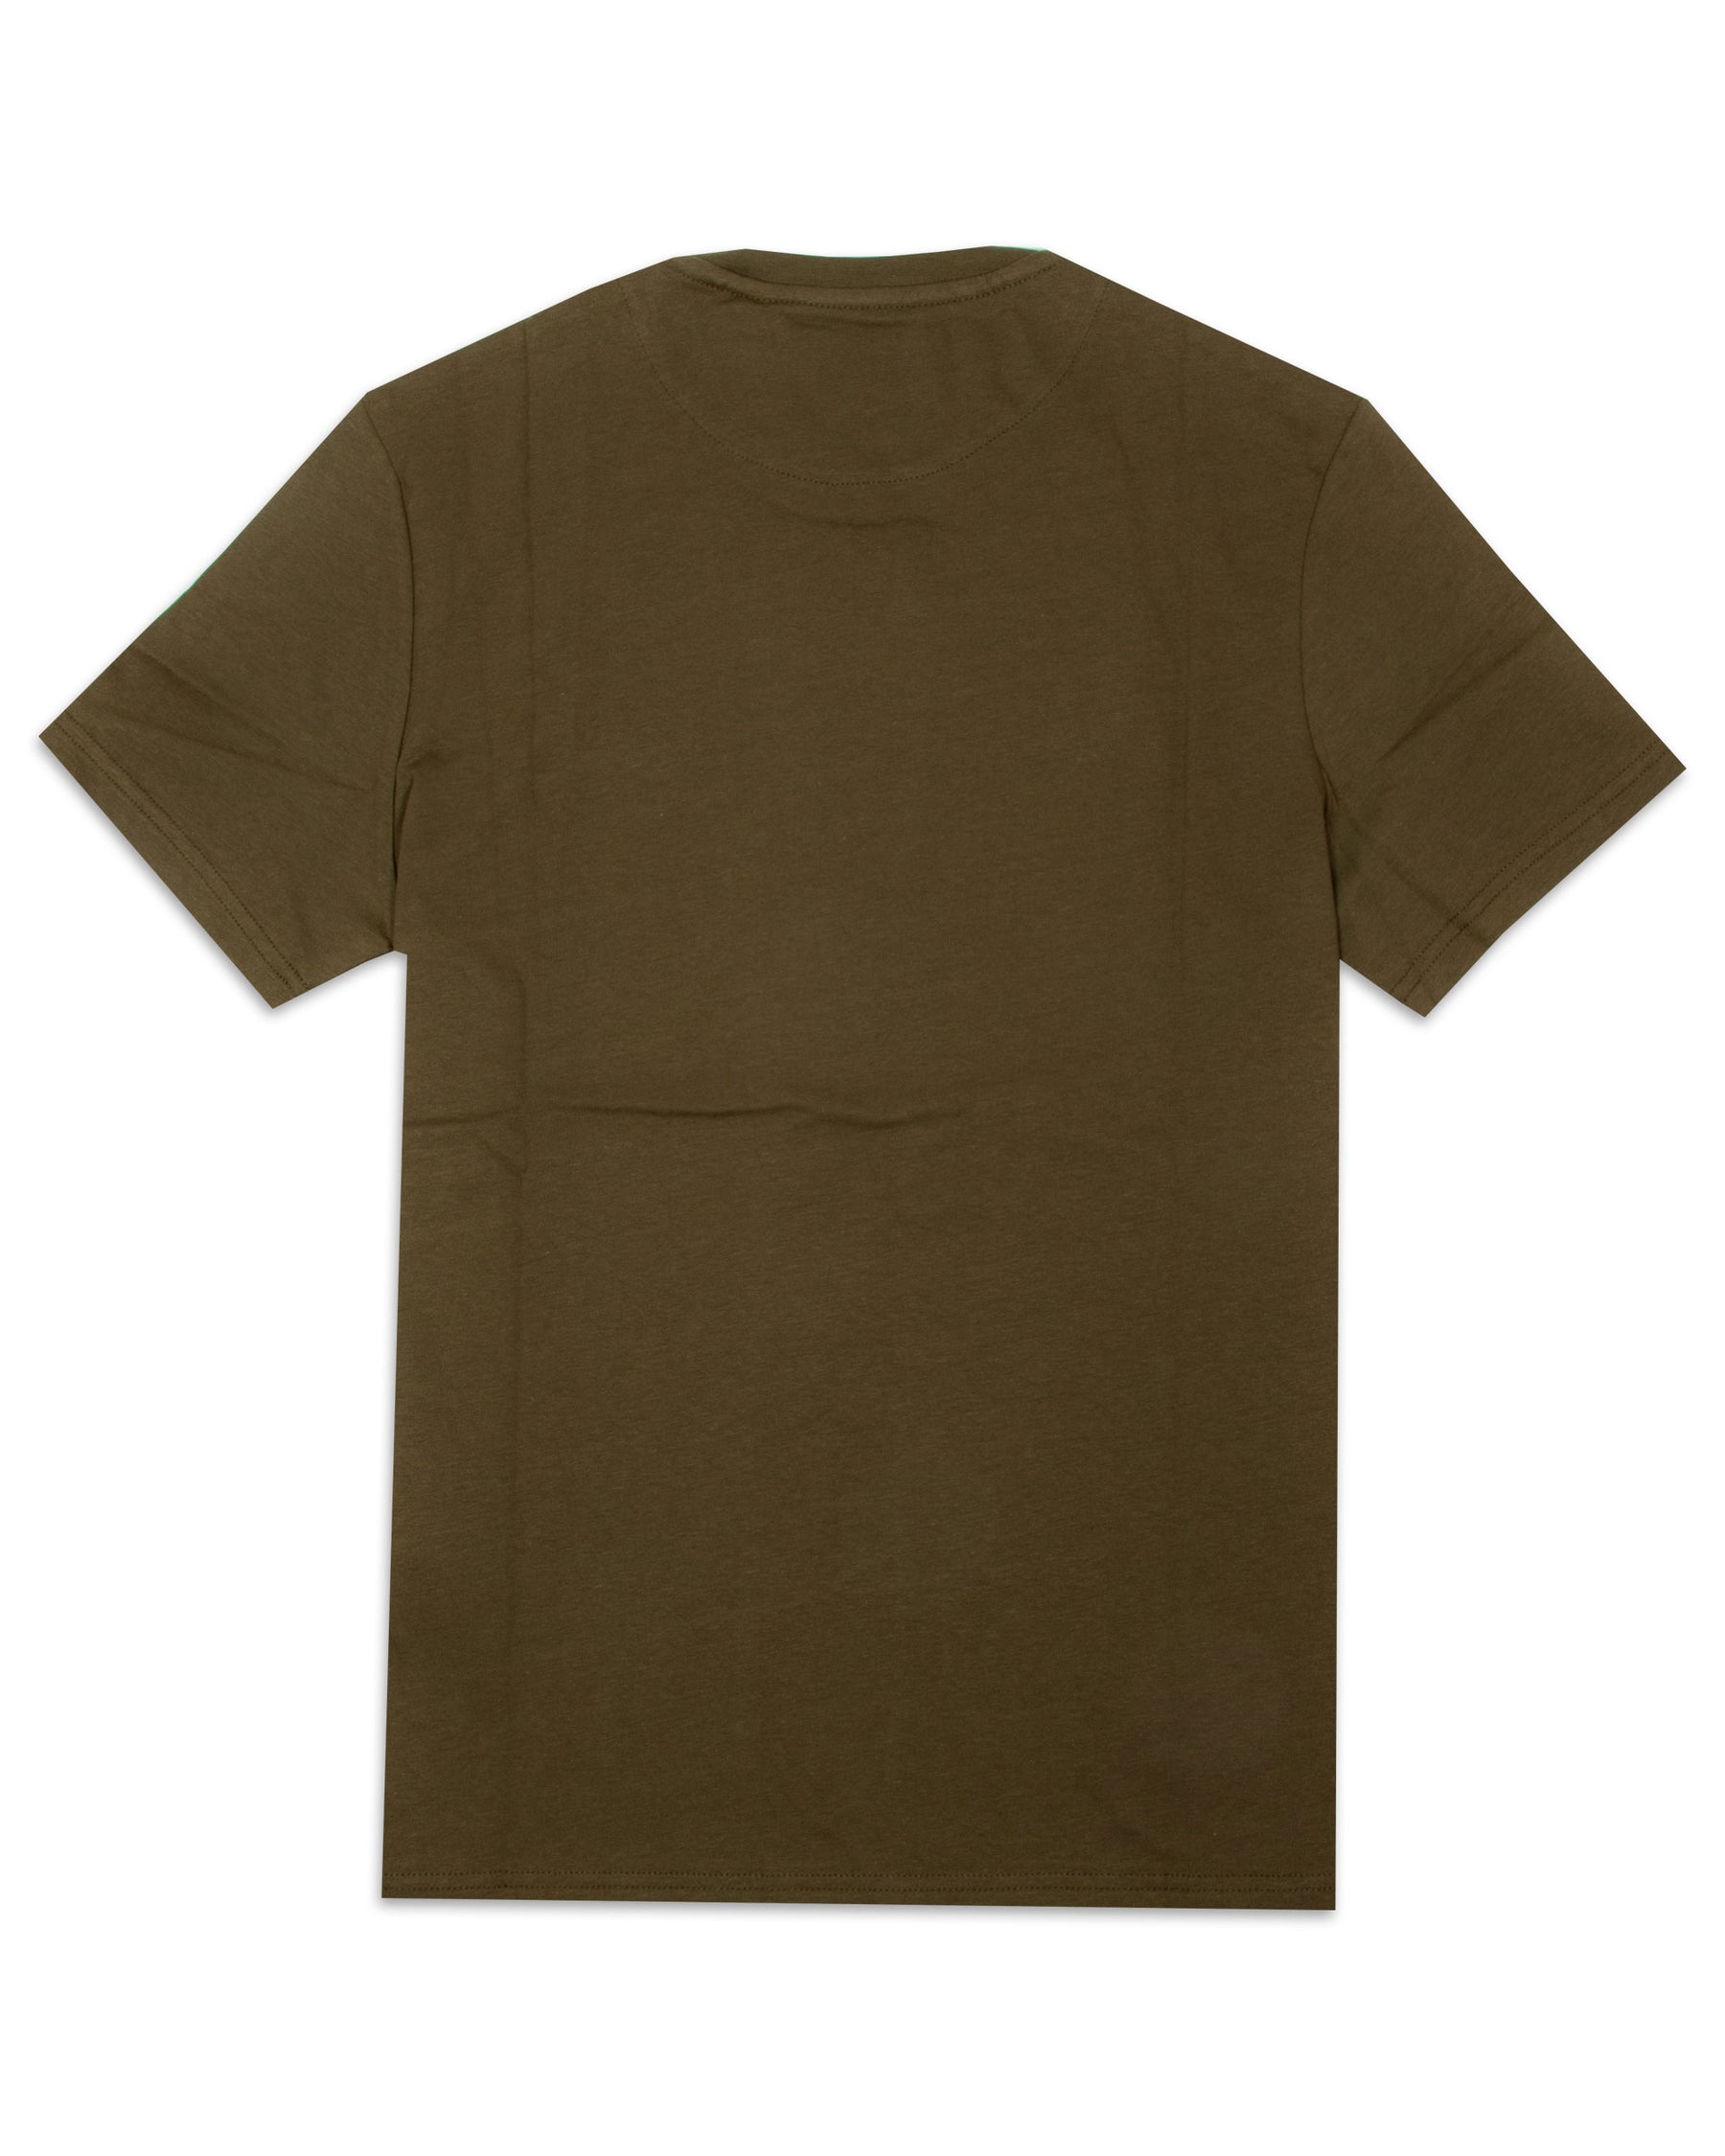 T-Shirt Uomo Lyle And Scott Classic Logo Verde Militare